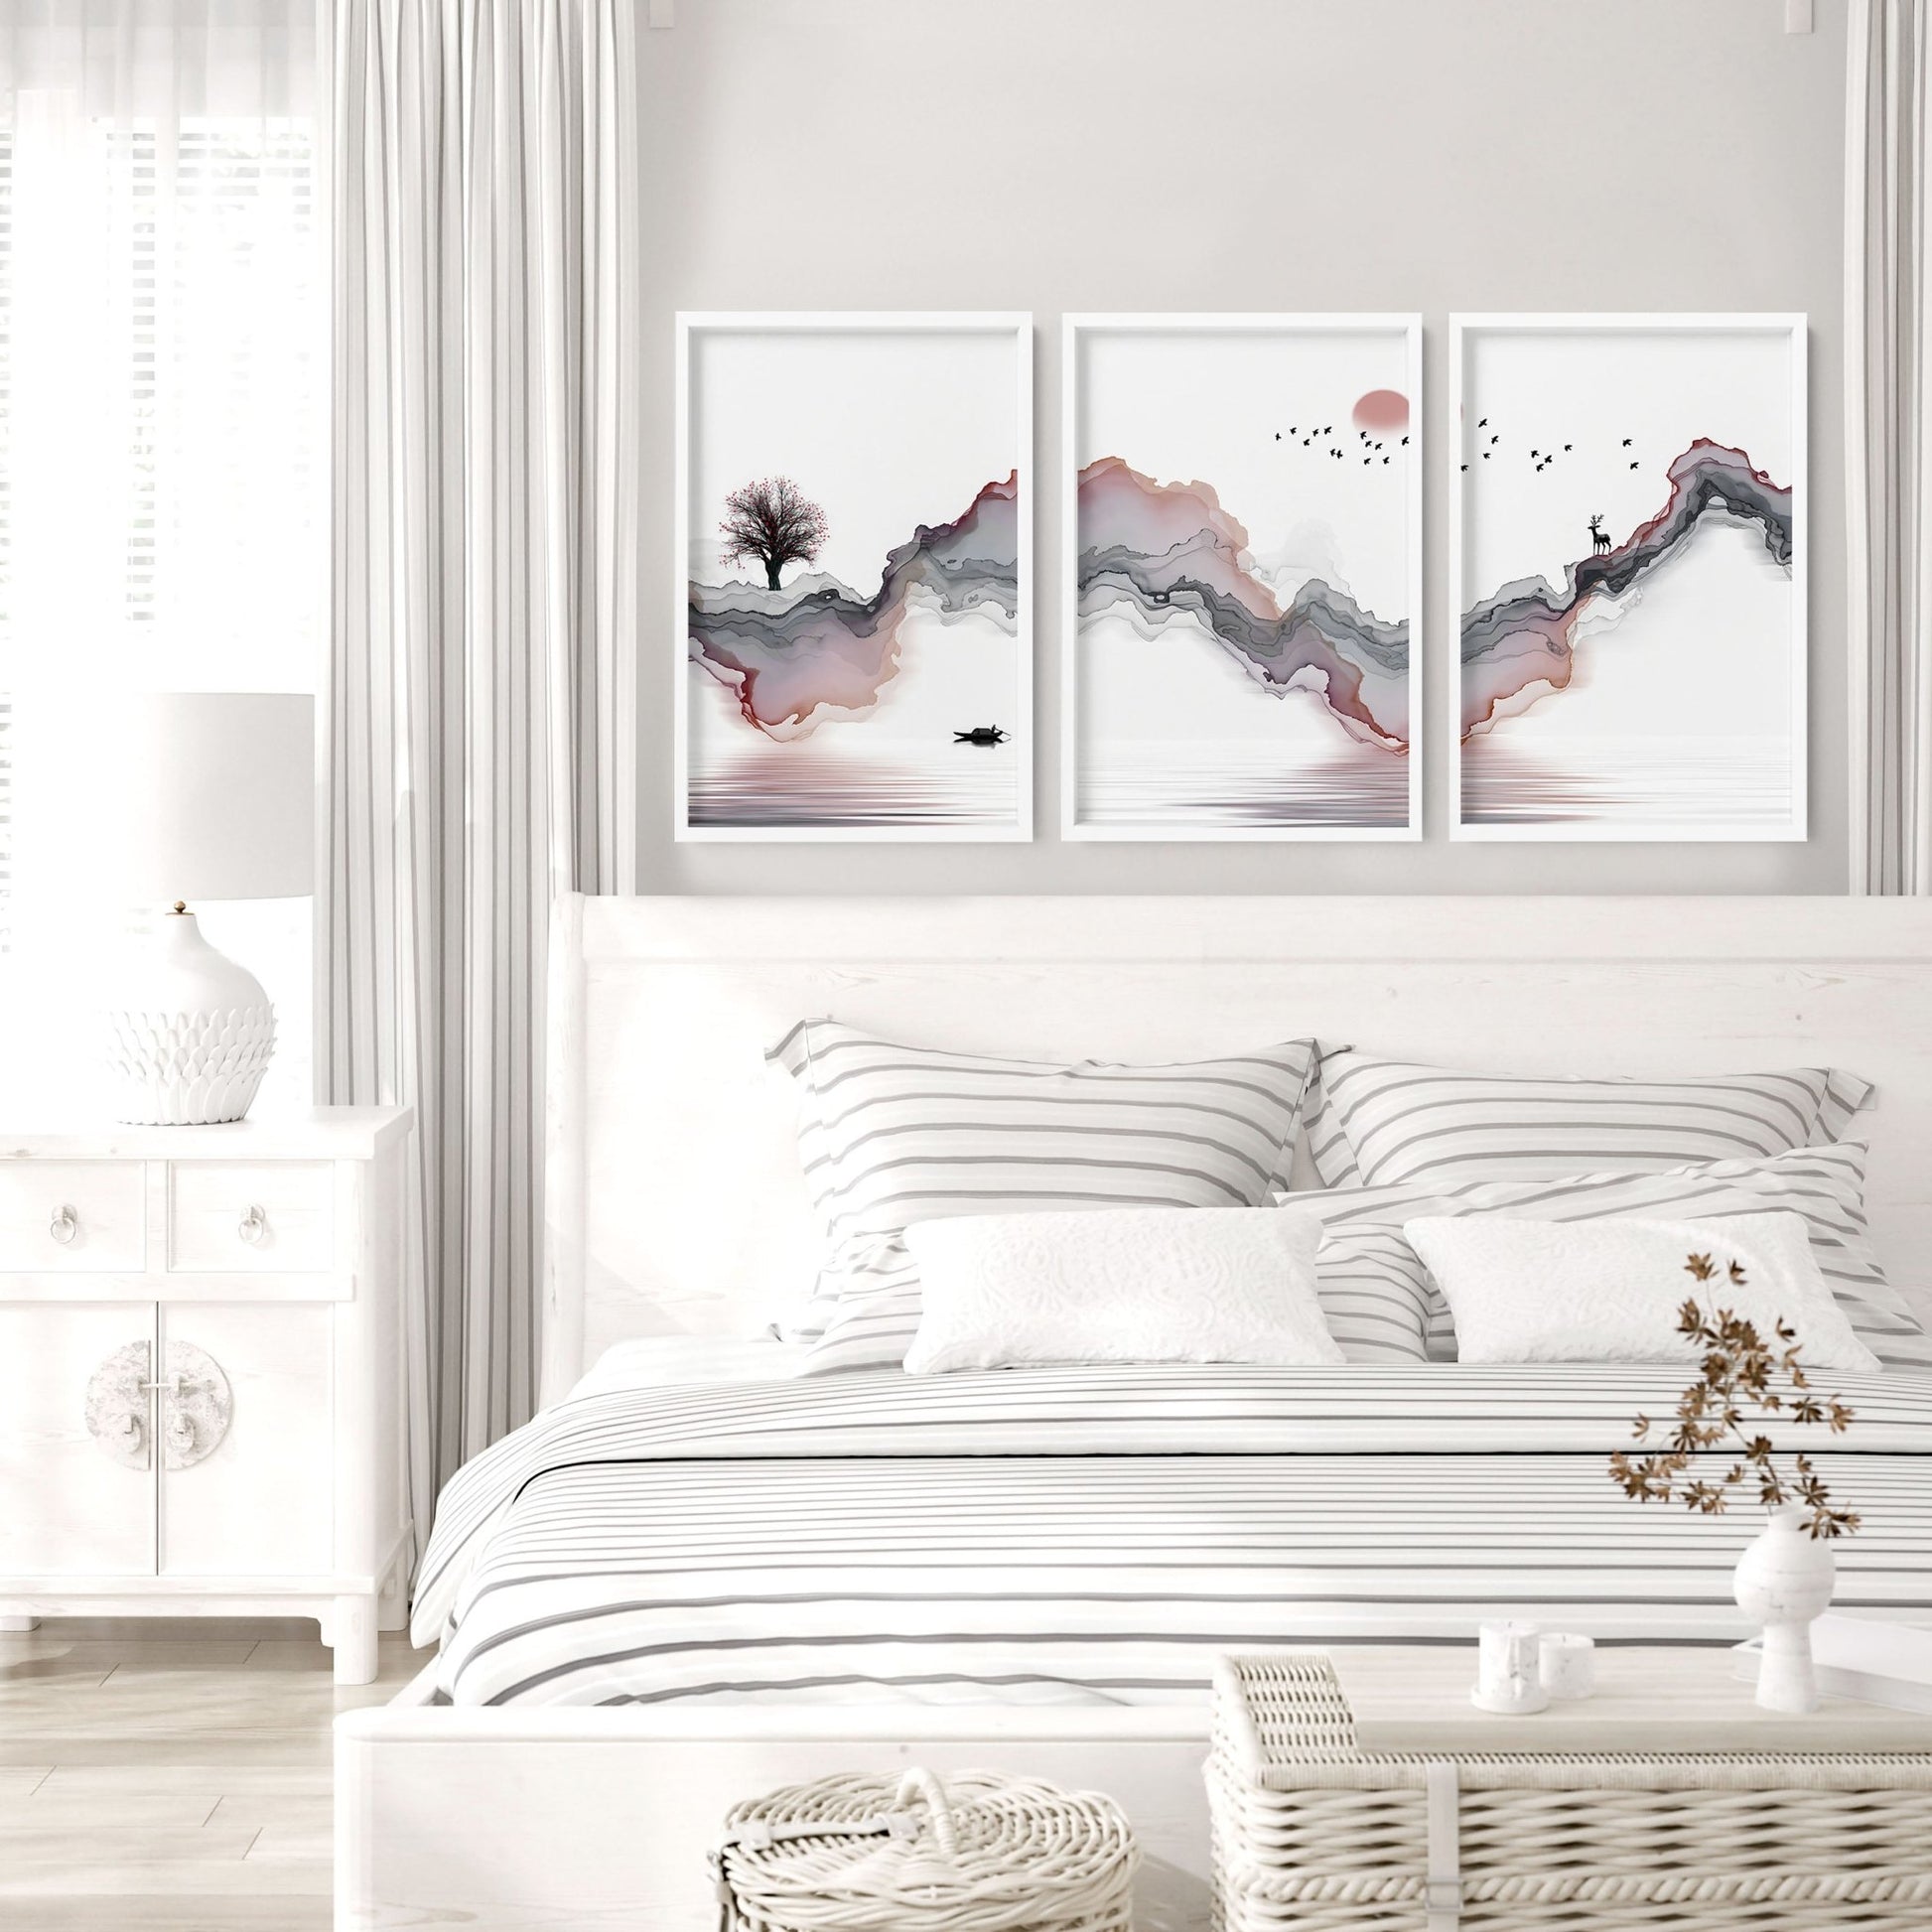 Zen bedroom decor | set of 3 wall art prints - About Wall Art